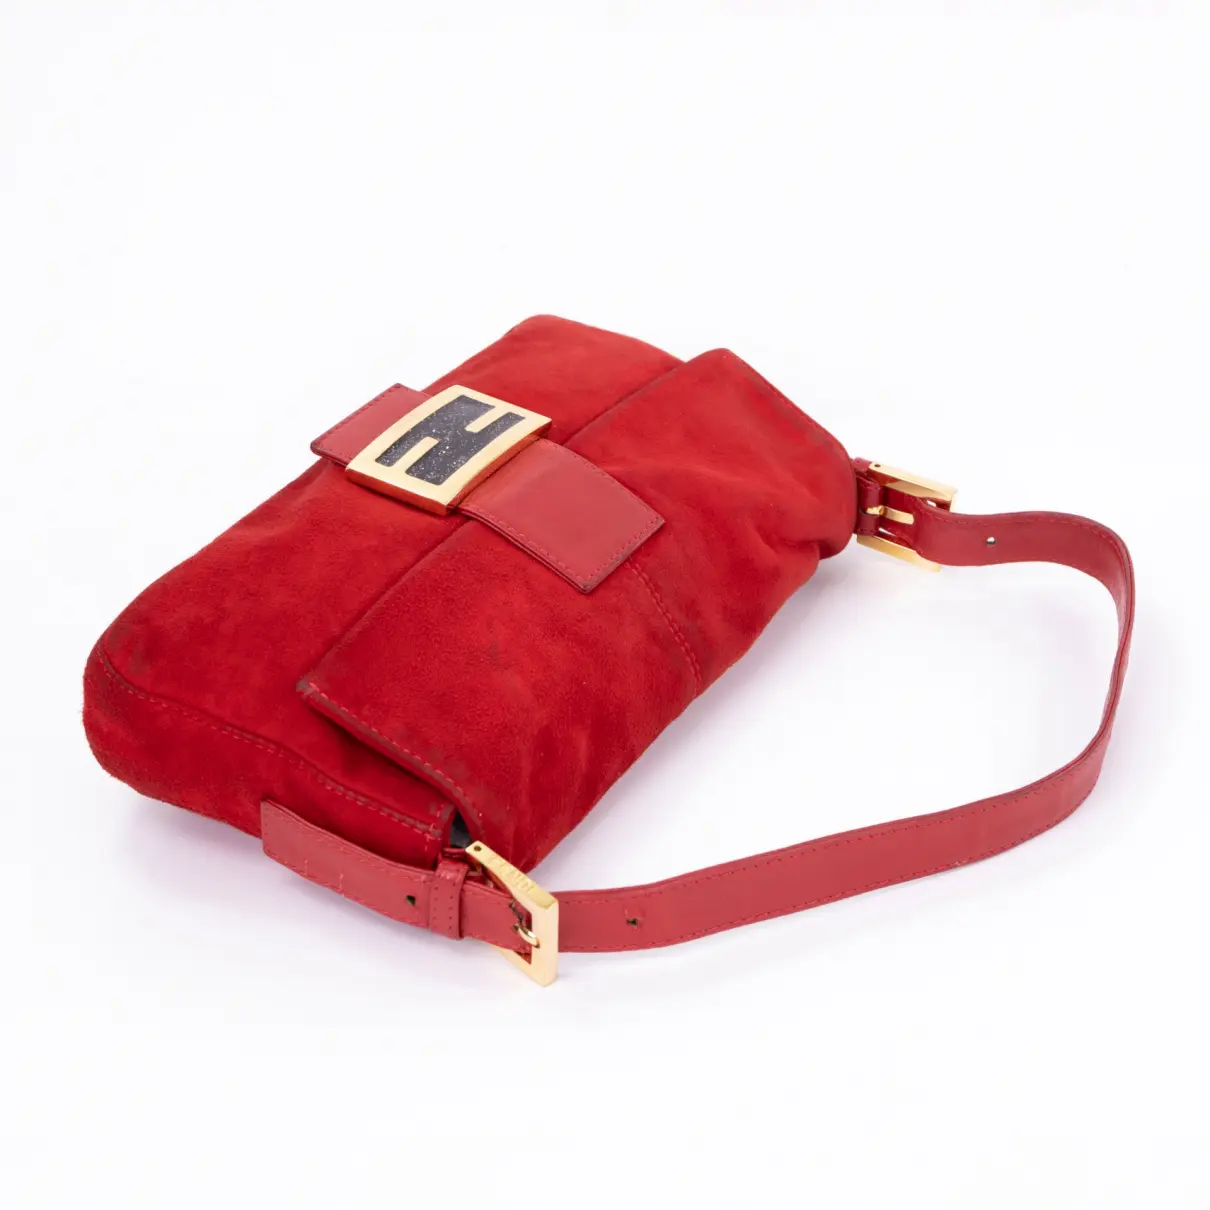 Baguette handbag Fendi - Vintage